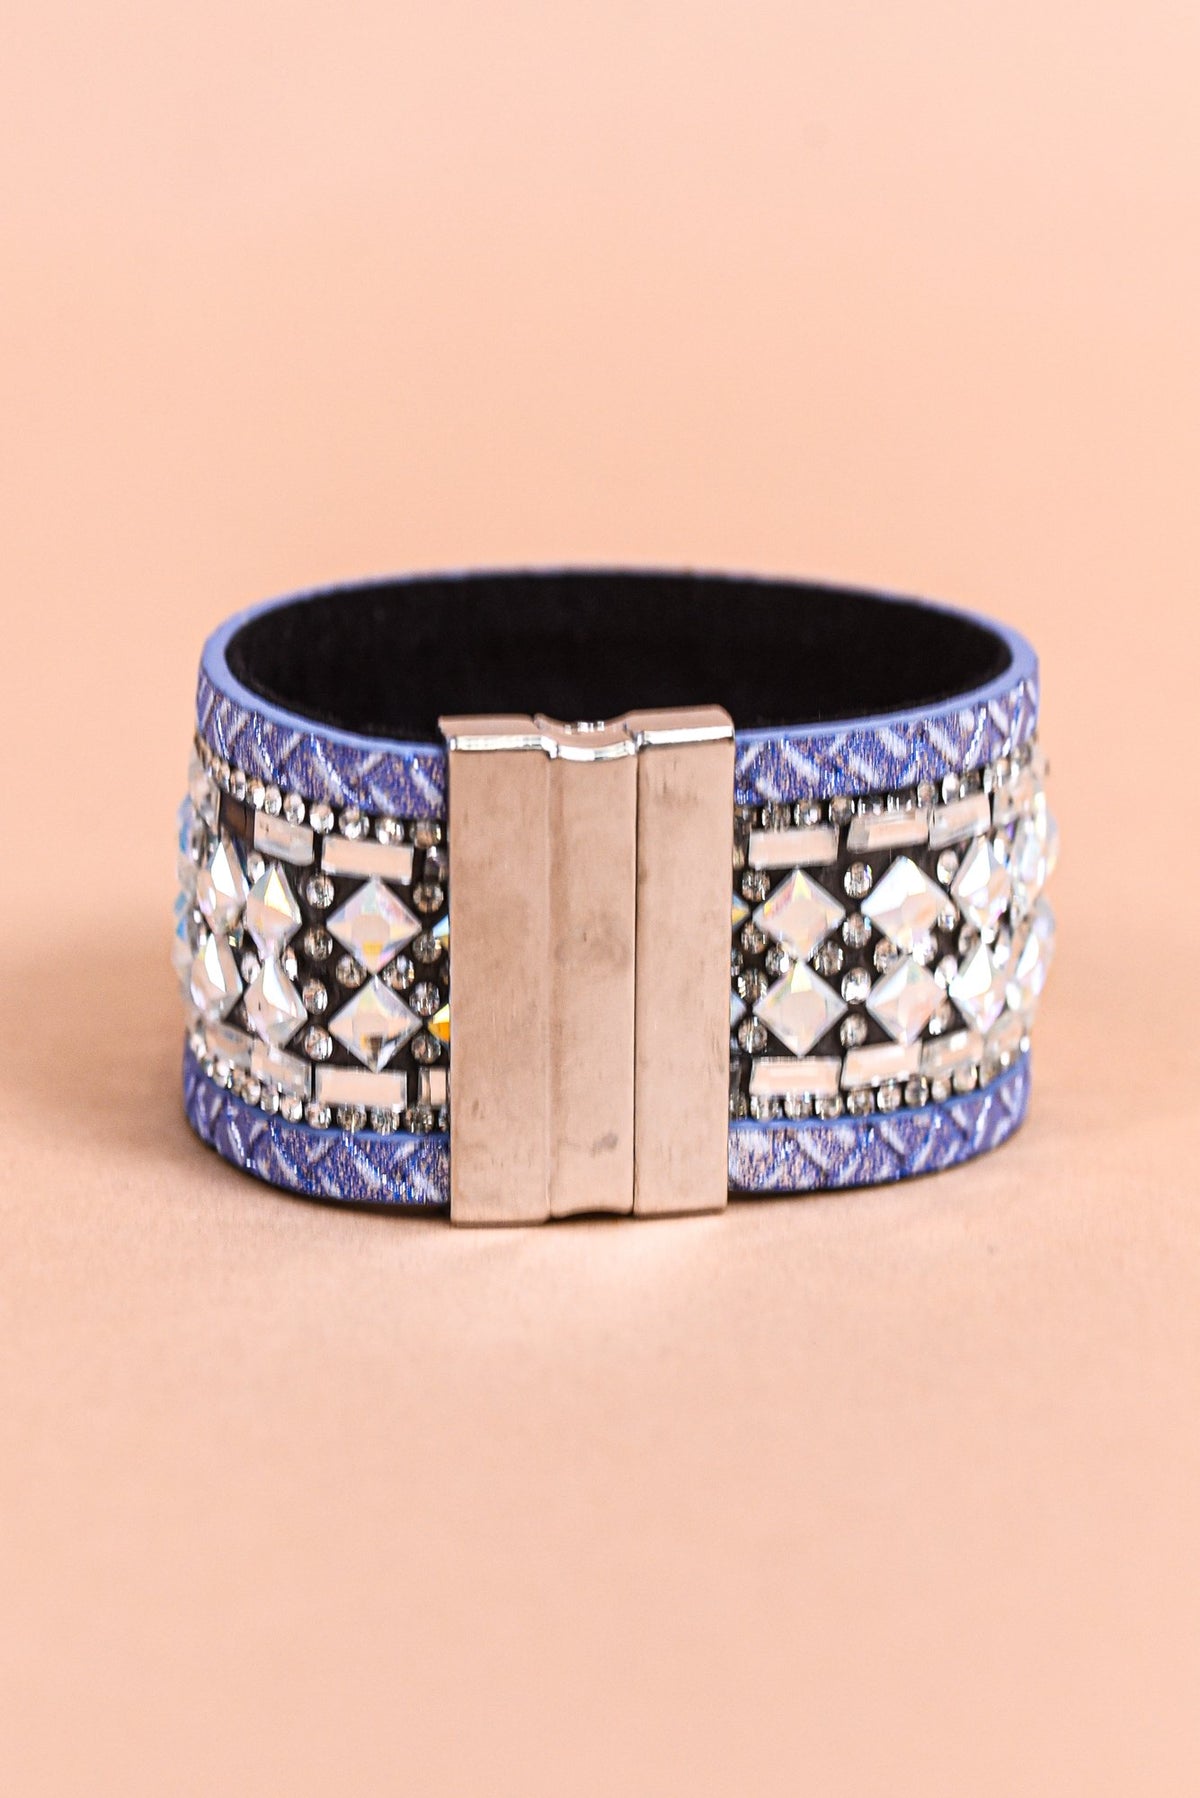 Light Blue/Diamond/Bling/Magnetic Closure Bracelet - BRC3105LBL